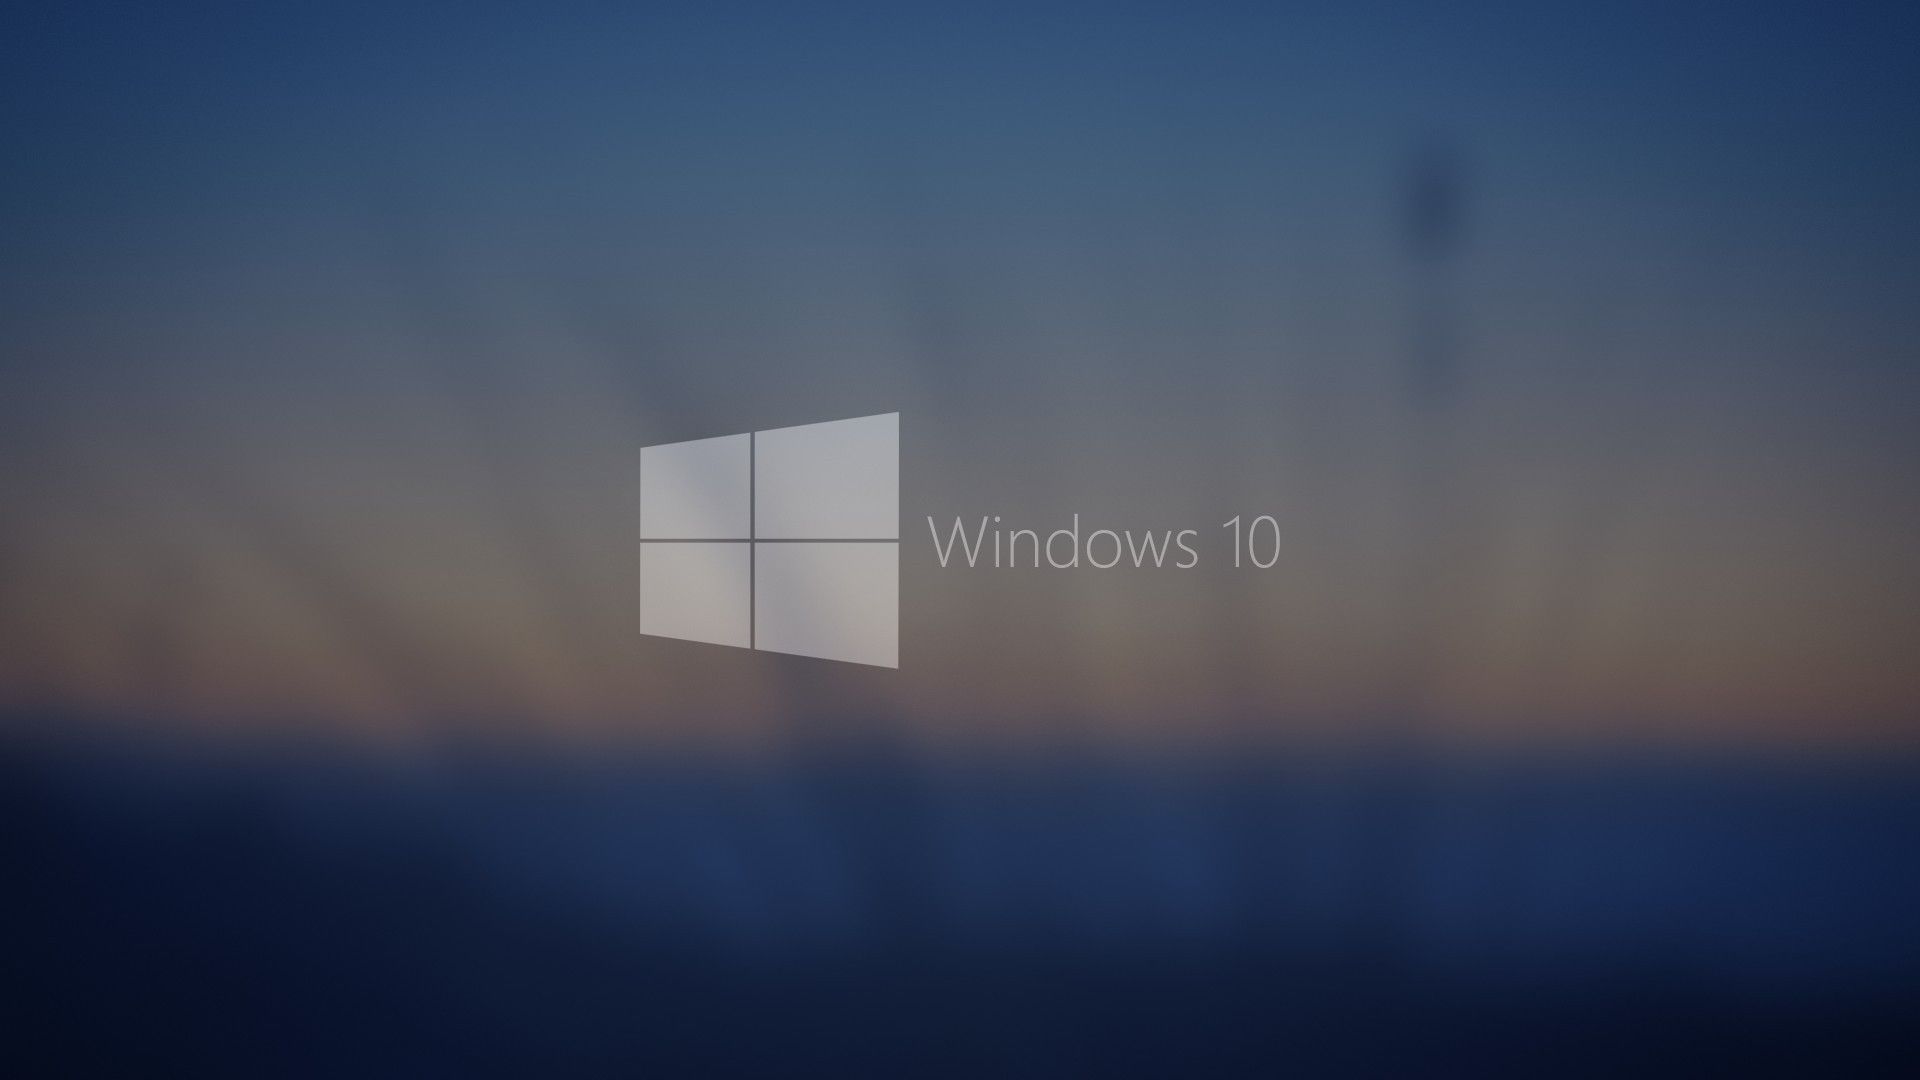 Windows 10 HD Background Live Wallpaper HD. Lenovo wallpaper, Windows 10 logo, Windows 10